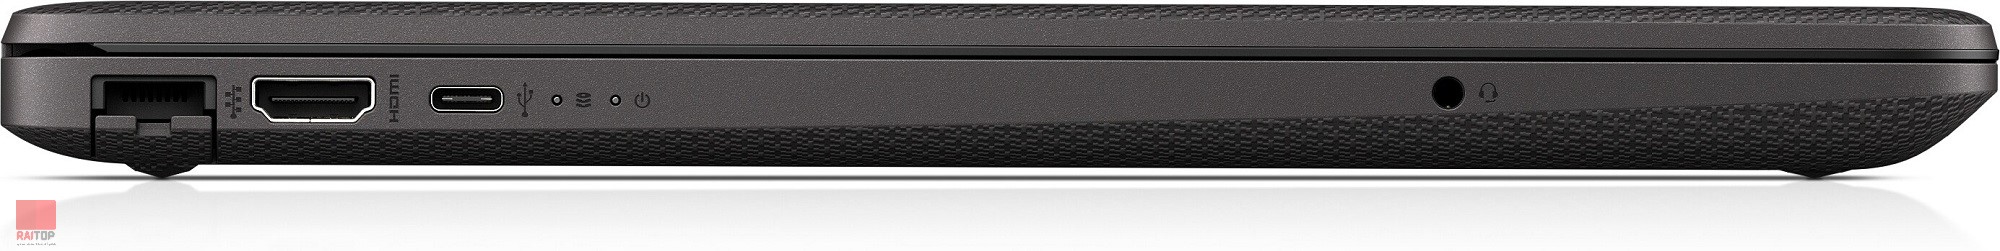 لپ تاپ اپن باکس 15.6 اینچی HP مدل 250 G8 پورت های چپ